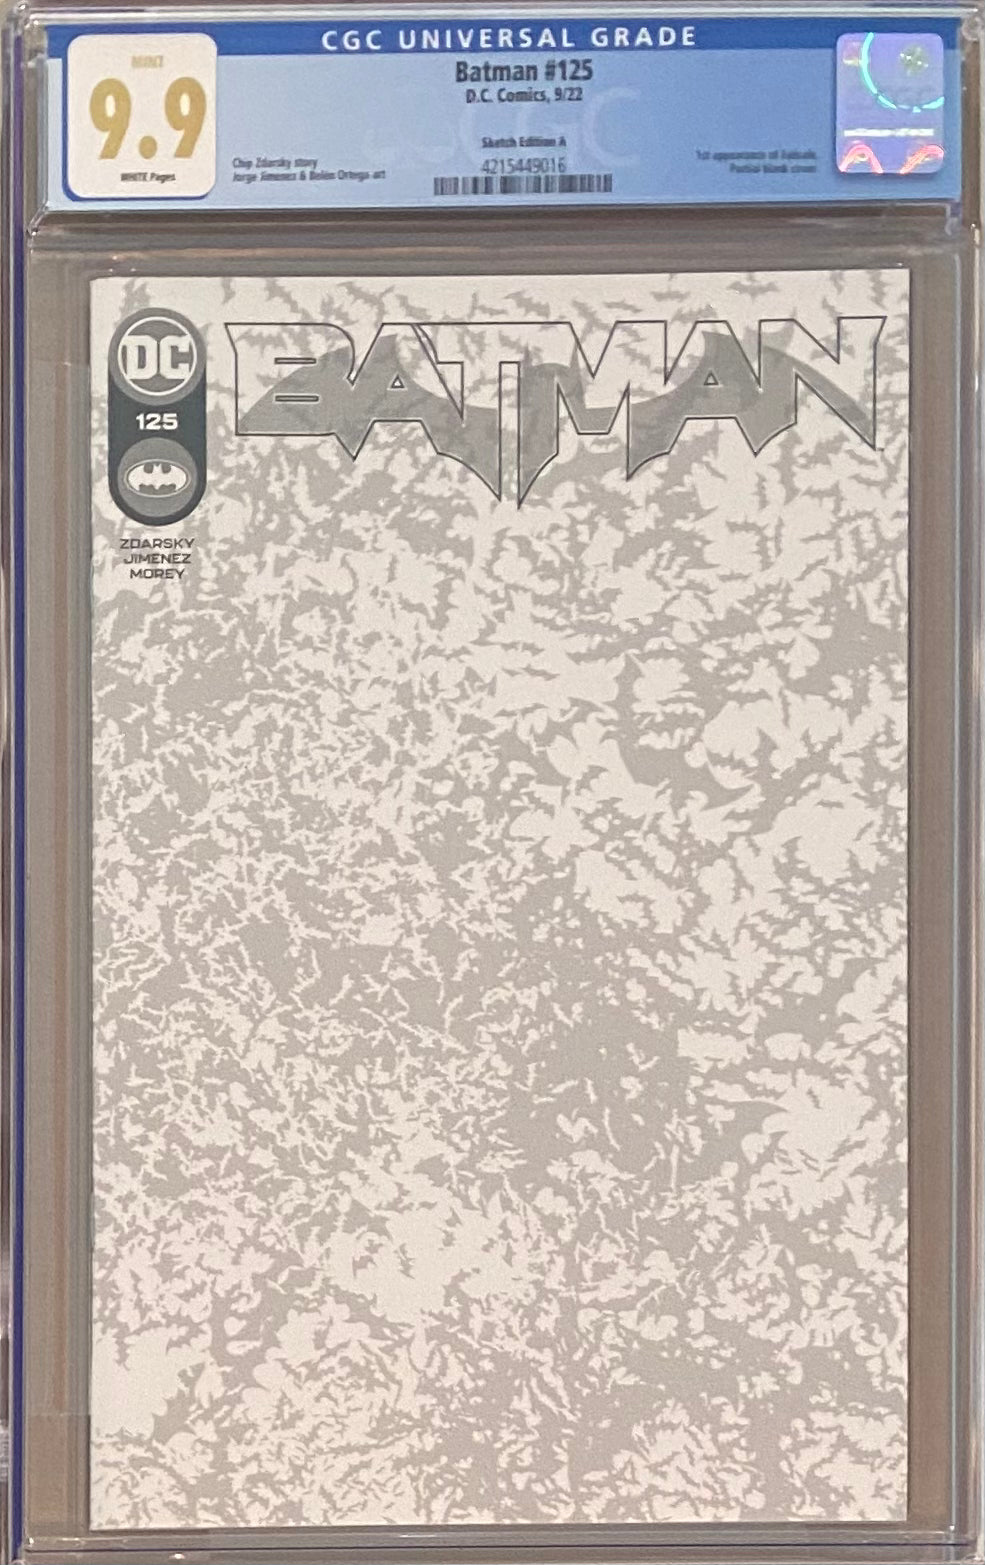 Batman #125 Blank Sketch Variant CGC 9.9 - First Appearance Failsafe